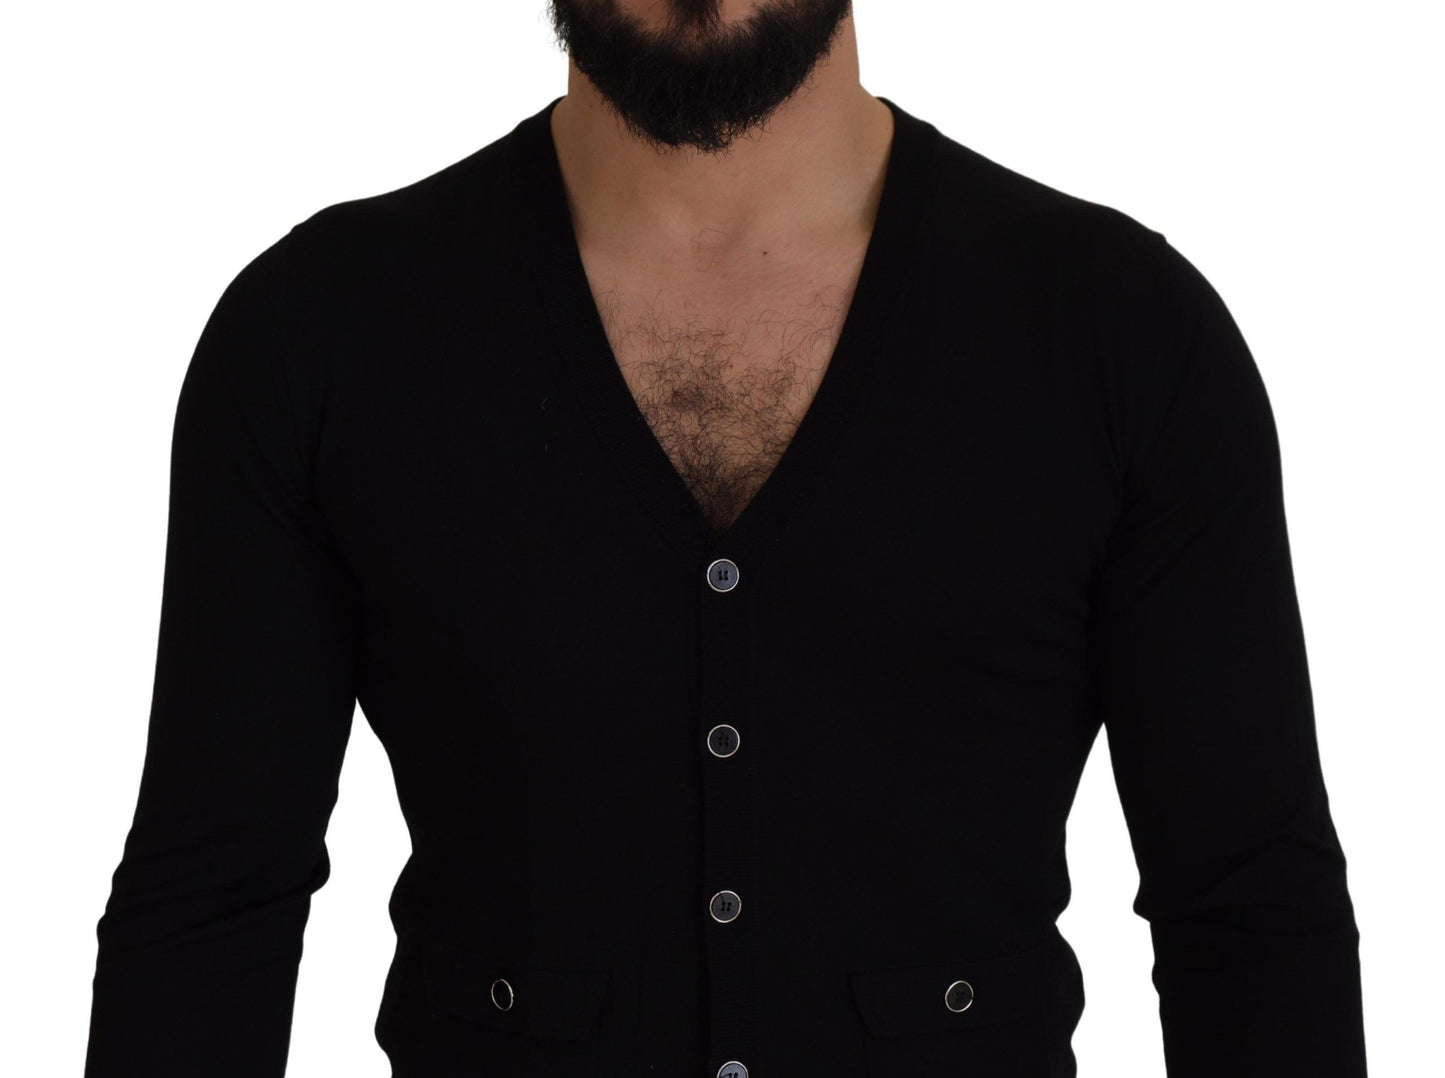 Elegant Wool Buttoned Black Cardigan